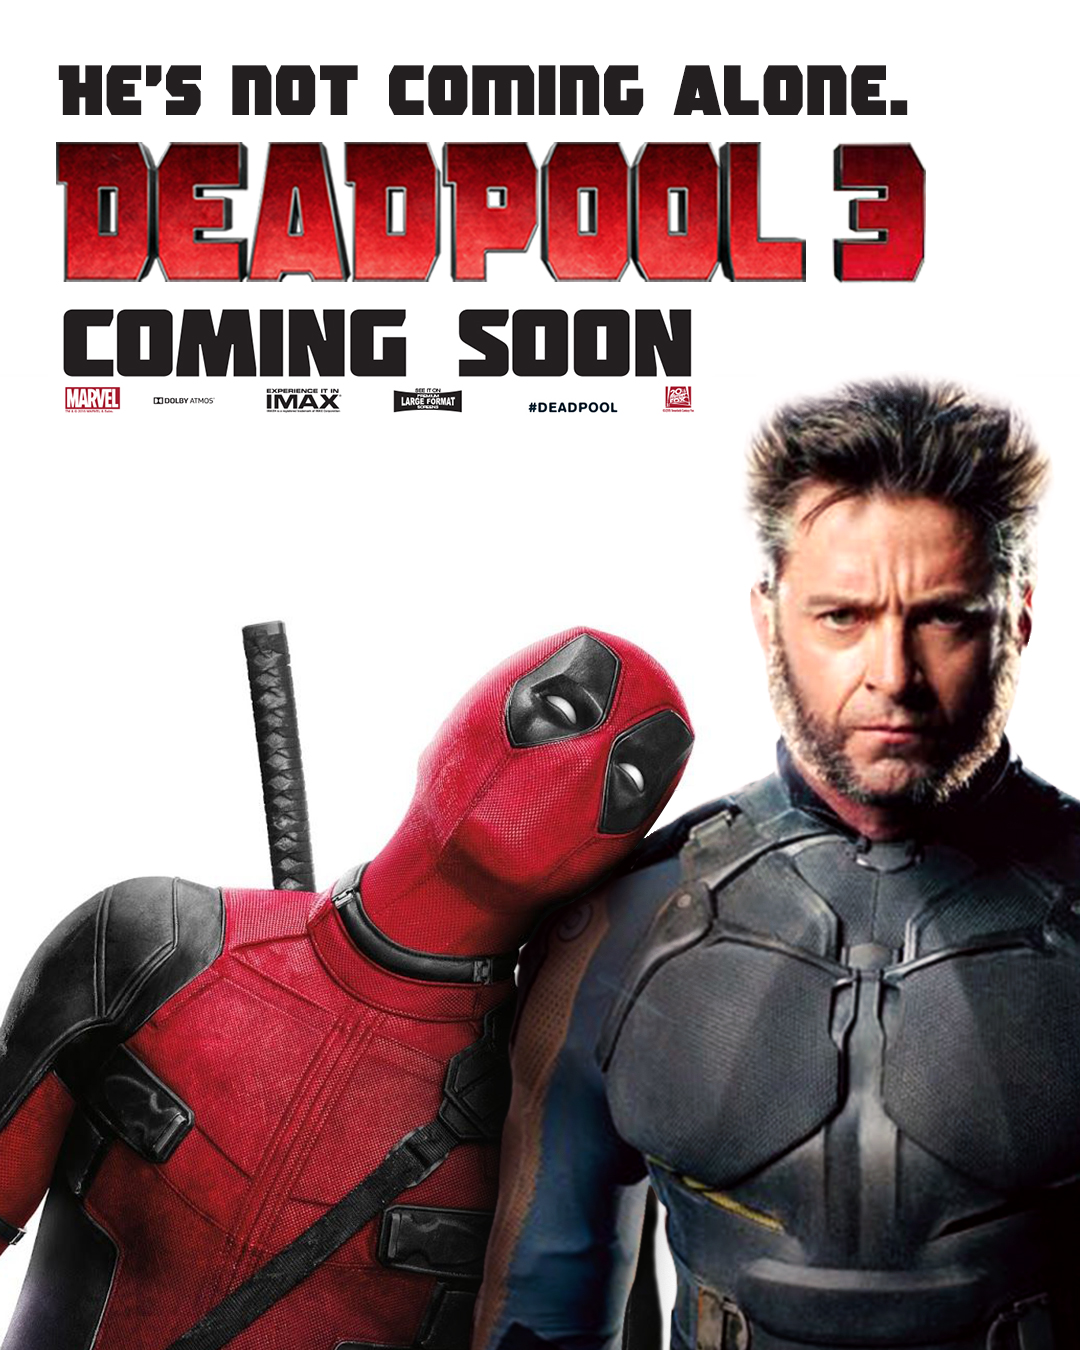 Deadpool 3 Movie Poster by KevindaGhost on DeviantArt